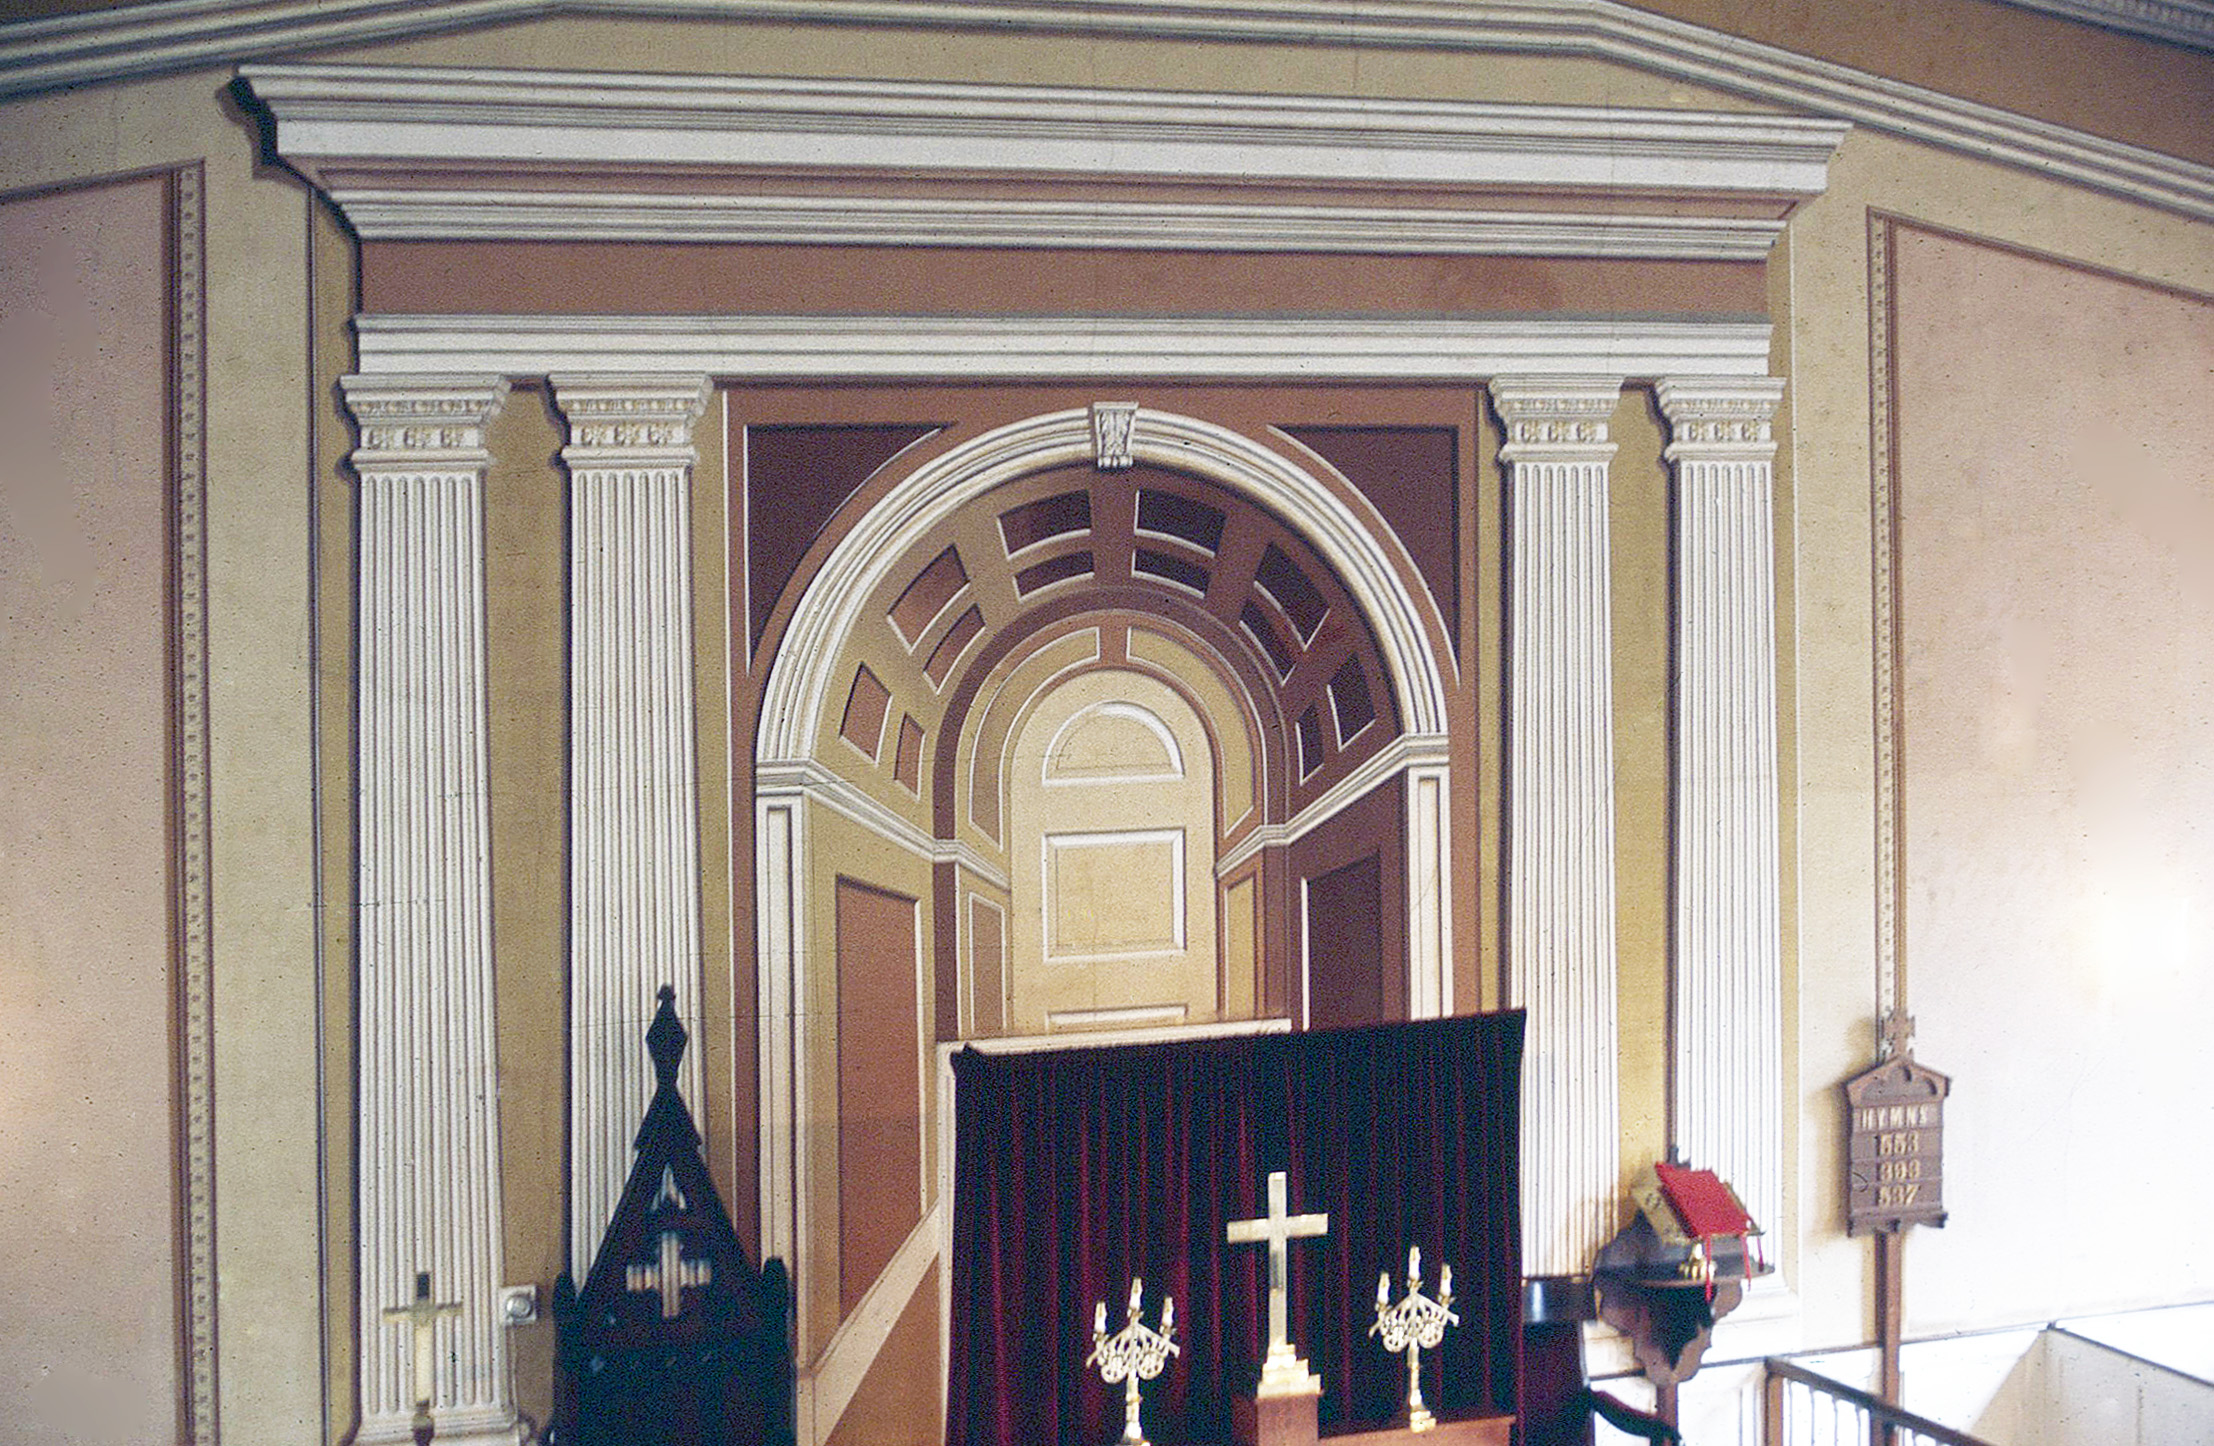 Interior trompe l’oeil painted decorations. Photo credit: DHR, 1969